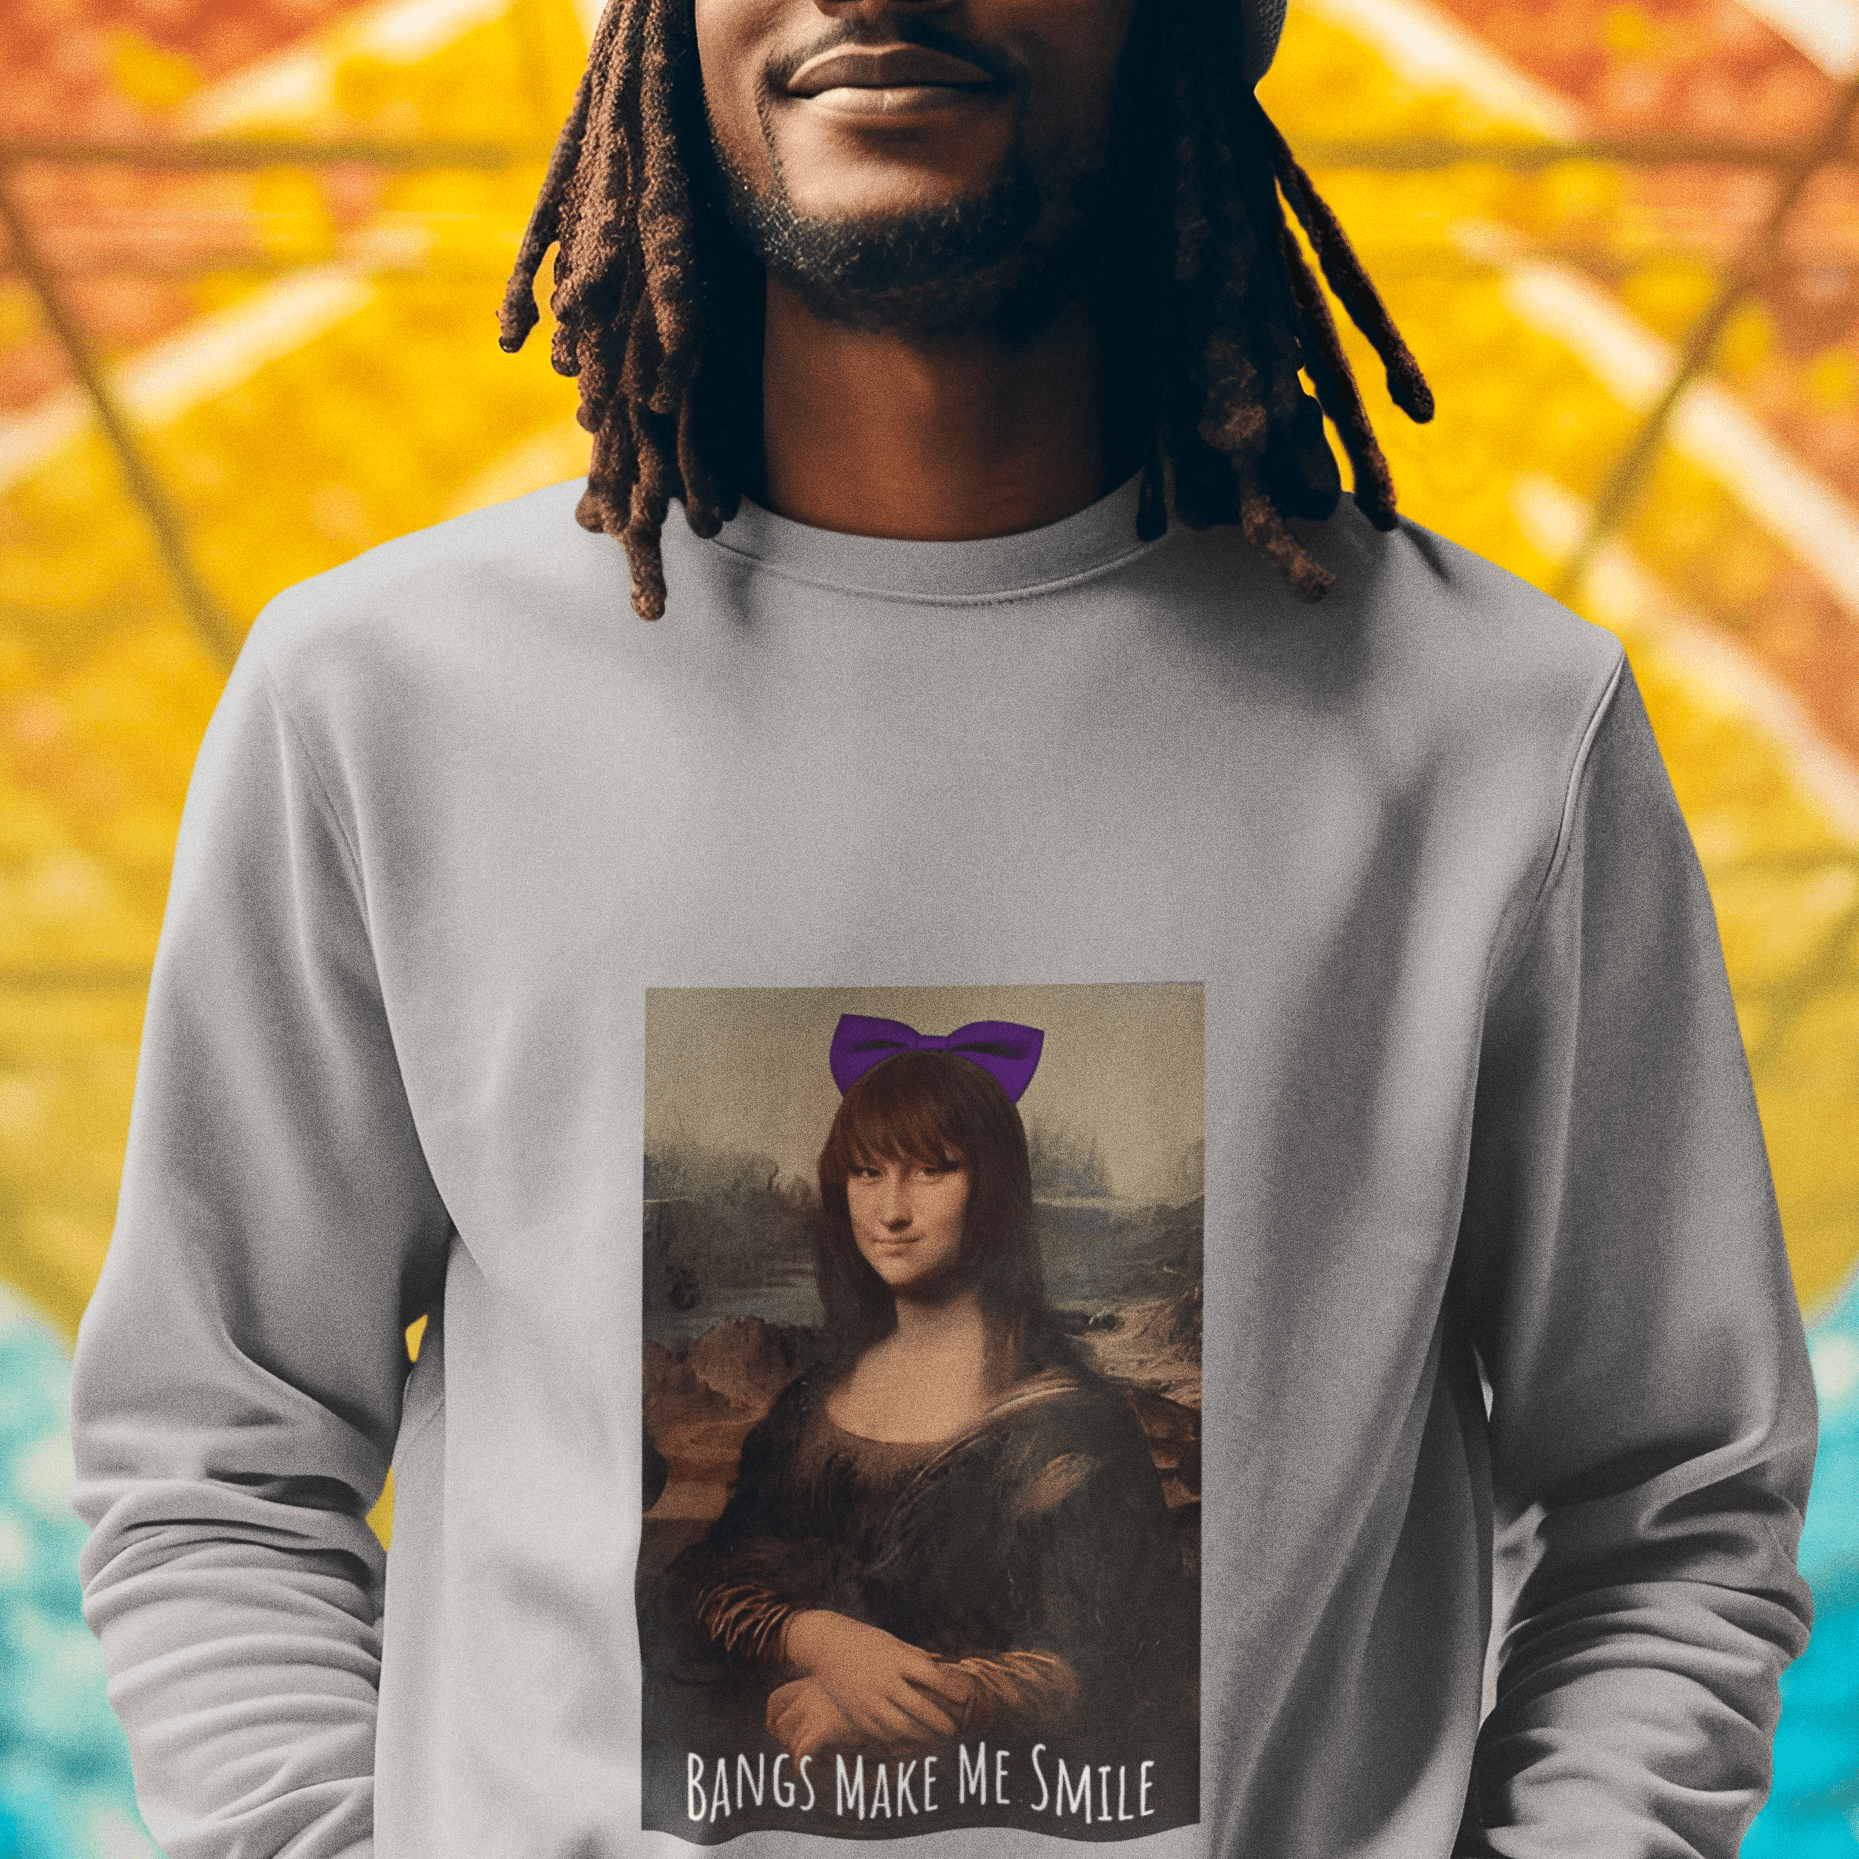 nevermindyrhead Mona Lisa Smile Unisex Crewneck Sweatshirt , Leonardo Da Vinci Painting T-shirt, Famous Portrait Artwork Print Shirt